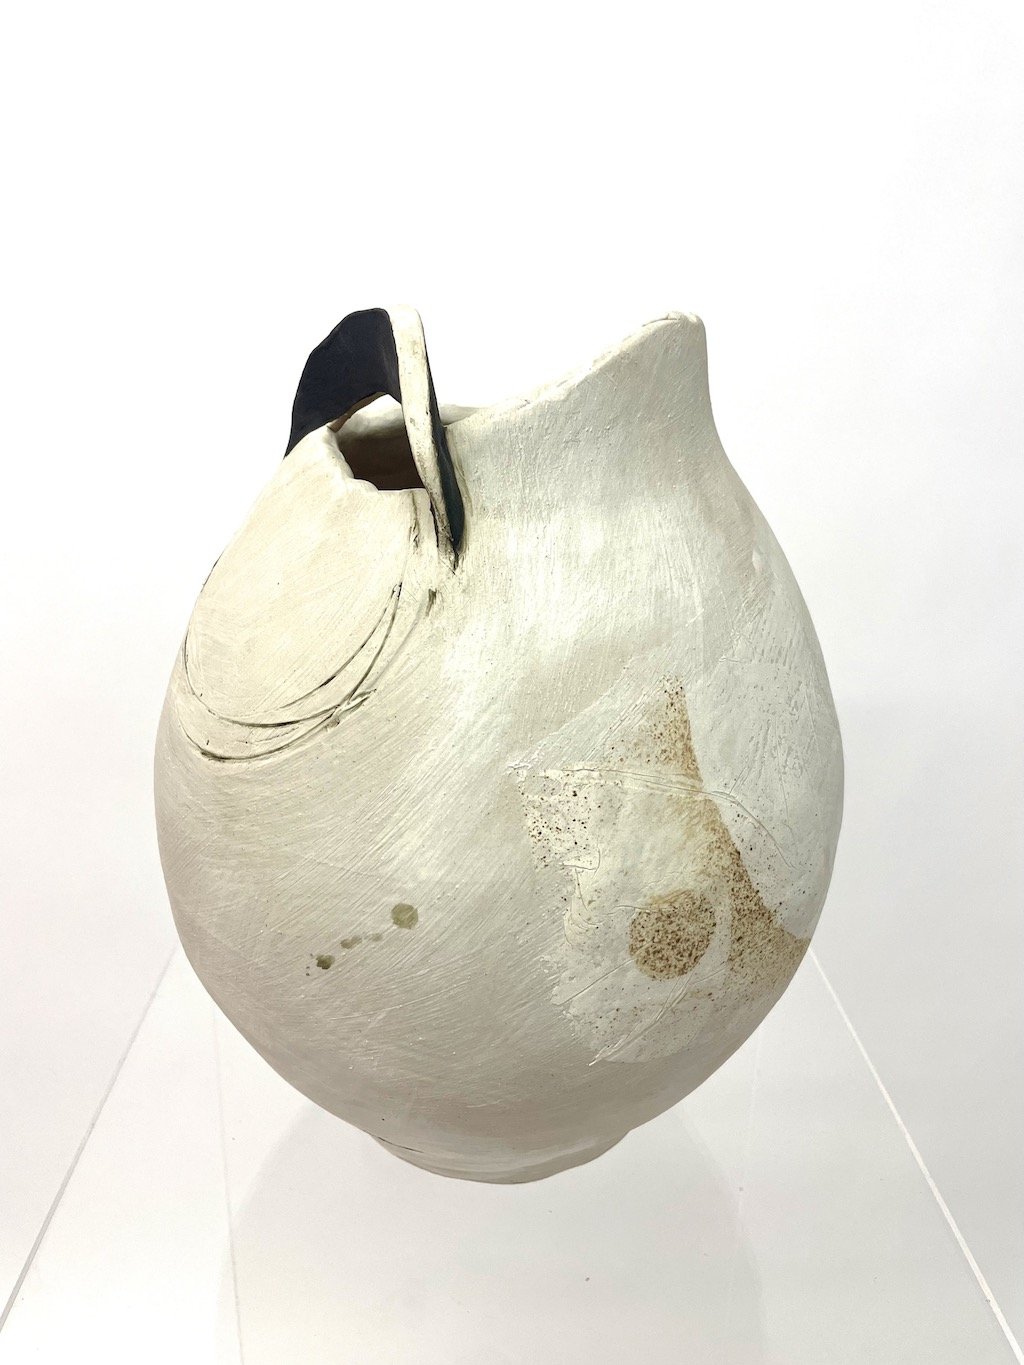 Moon Vessel Five, Stoneware with slip, underglaze and underglaze pencil, with Abalone Pink interior glaze, 13h" x11”w x 11"d, 2022.